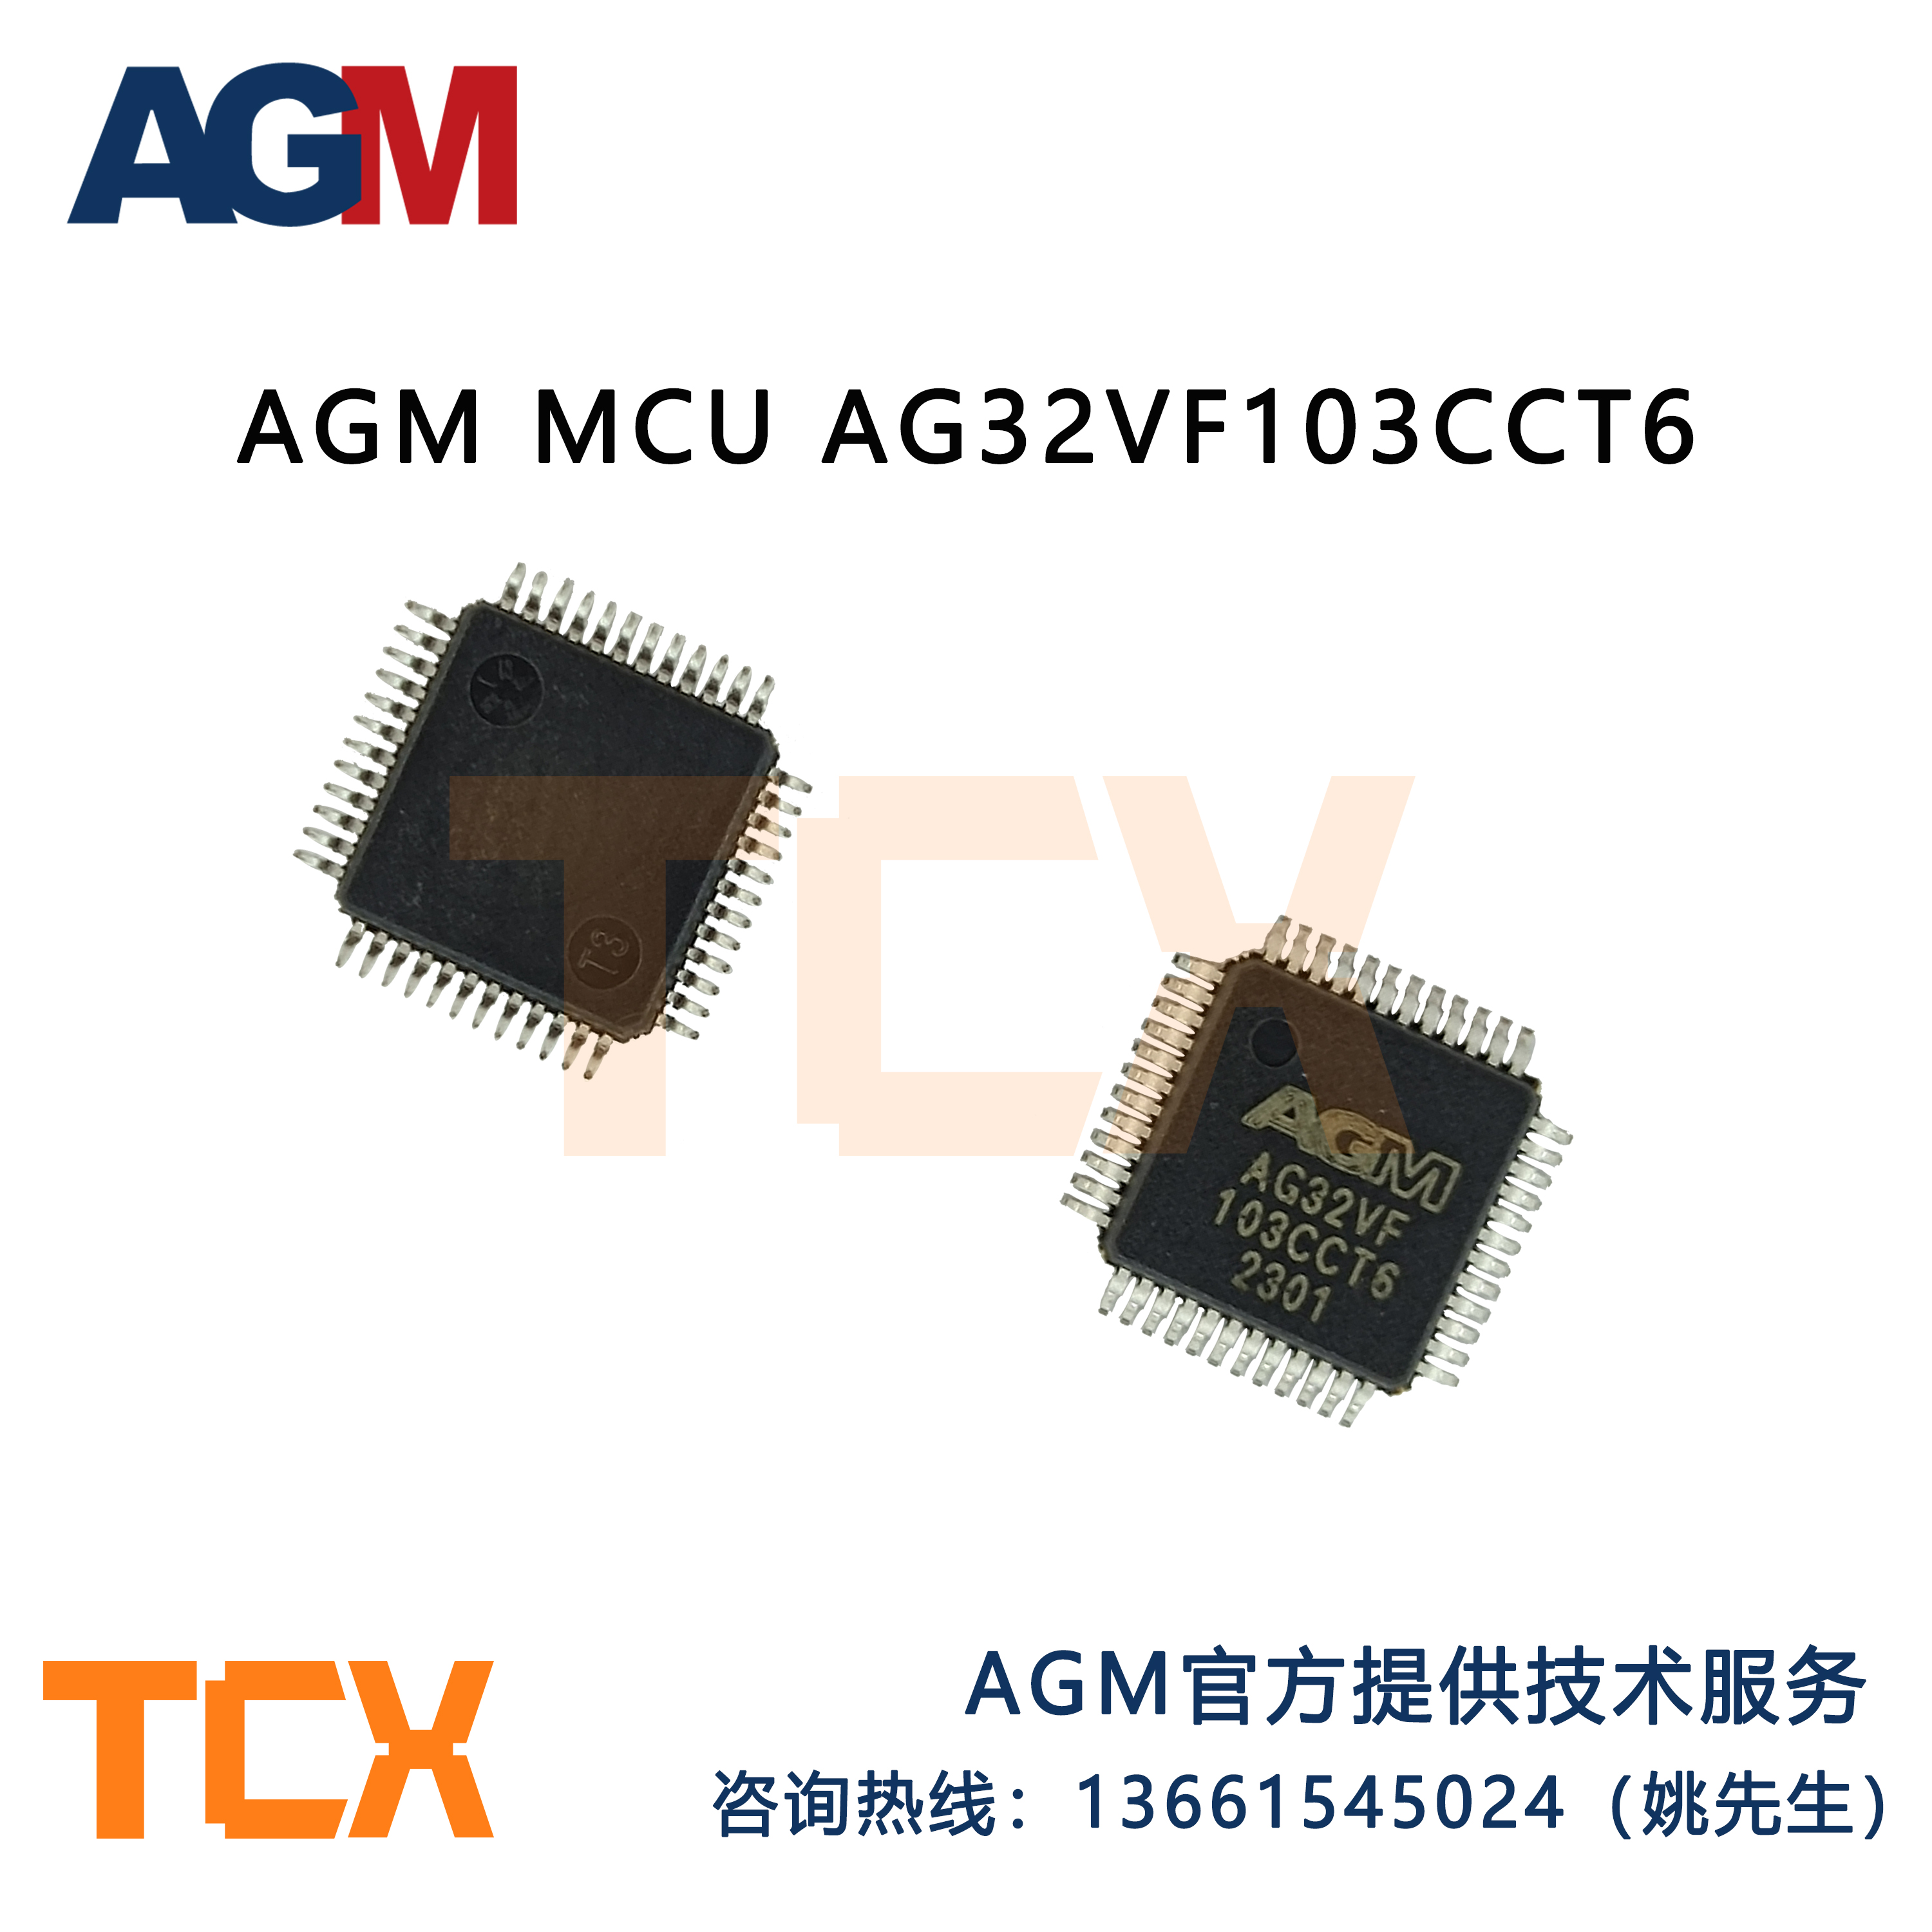 AGM MCU芯片 AG32VF103CCT6(48pin )国产替代STM GD内嵌2KLES FPG 电子元器件市场 微处理器/微控制器/单片机 原图主图